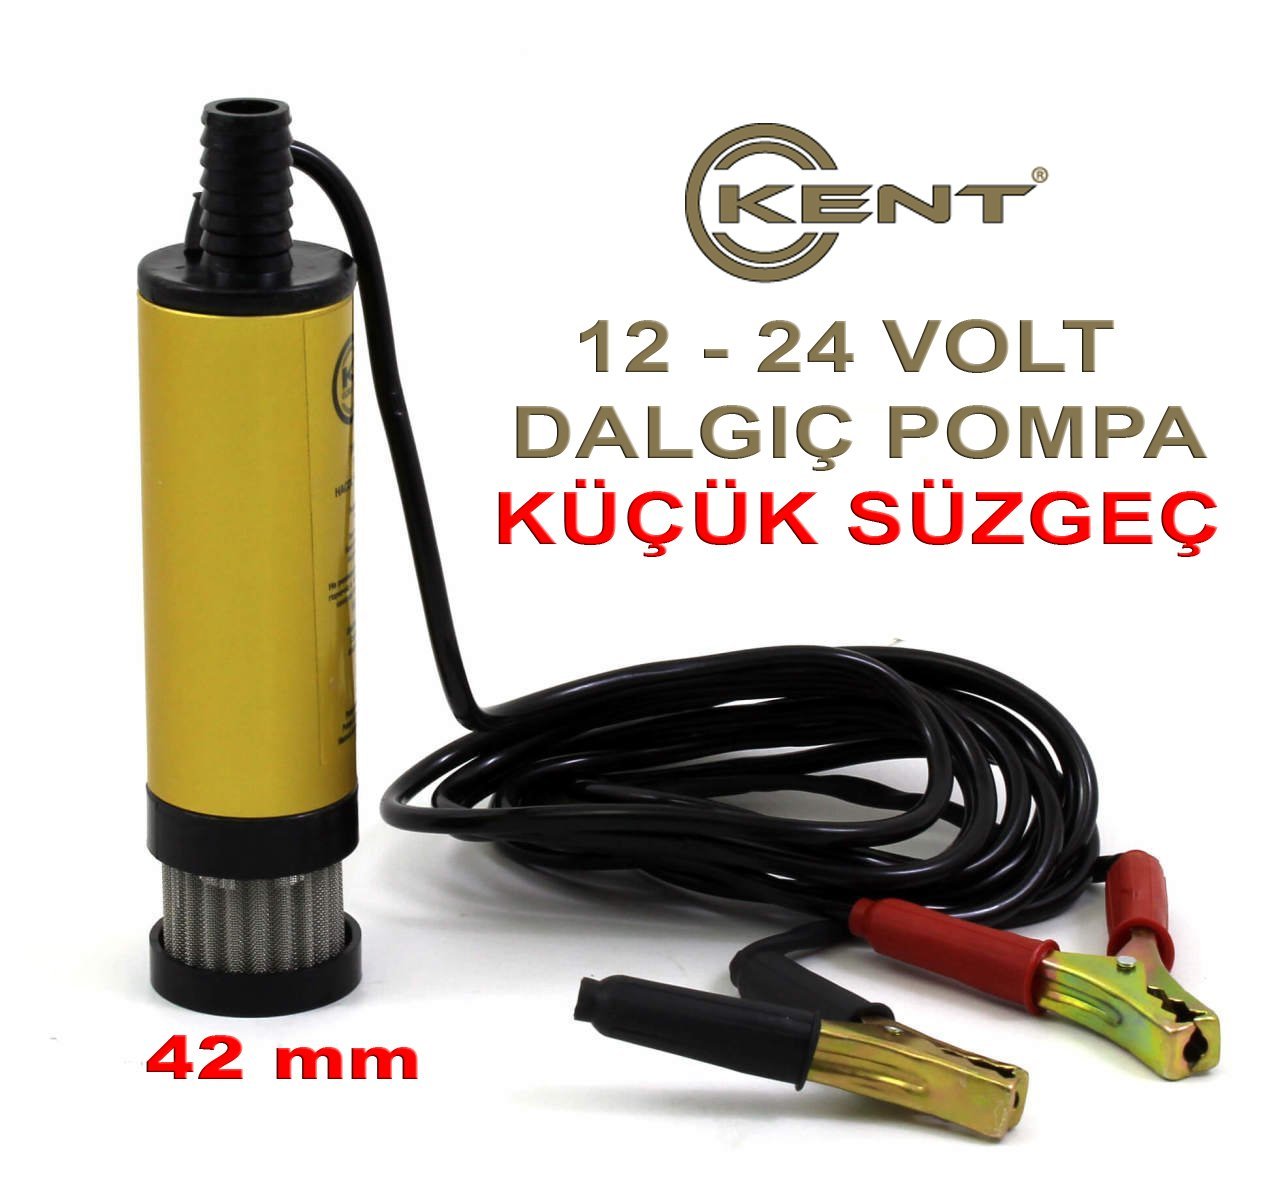 KENT 12-24 Volt Mazot Transfer Mini Dalgıç Pompası Küçük Süzgeç